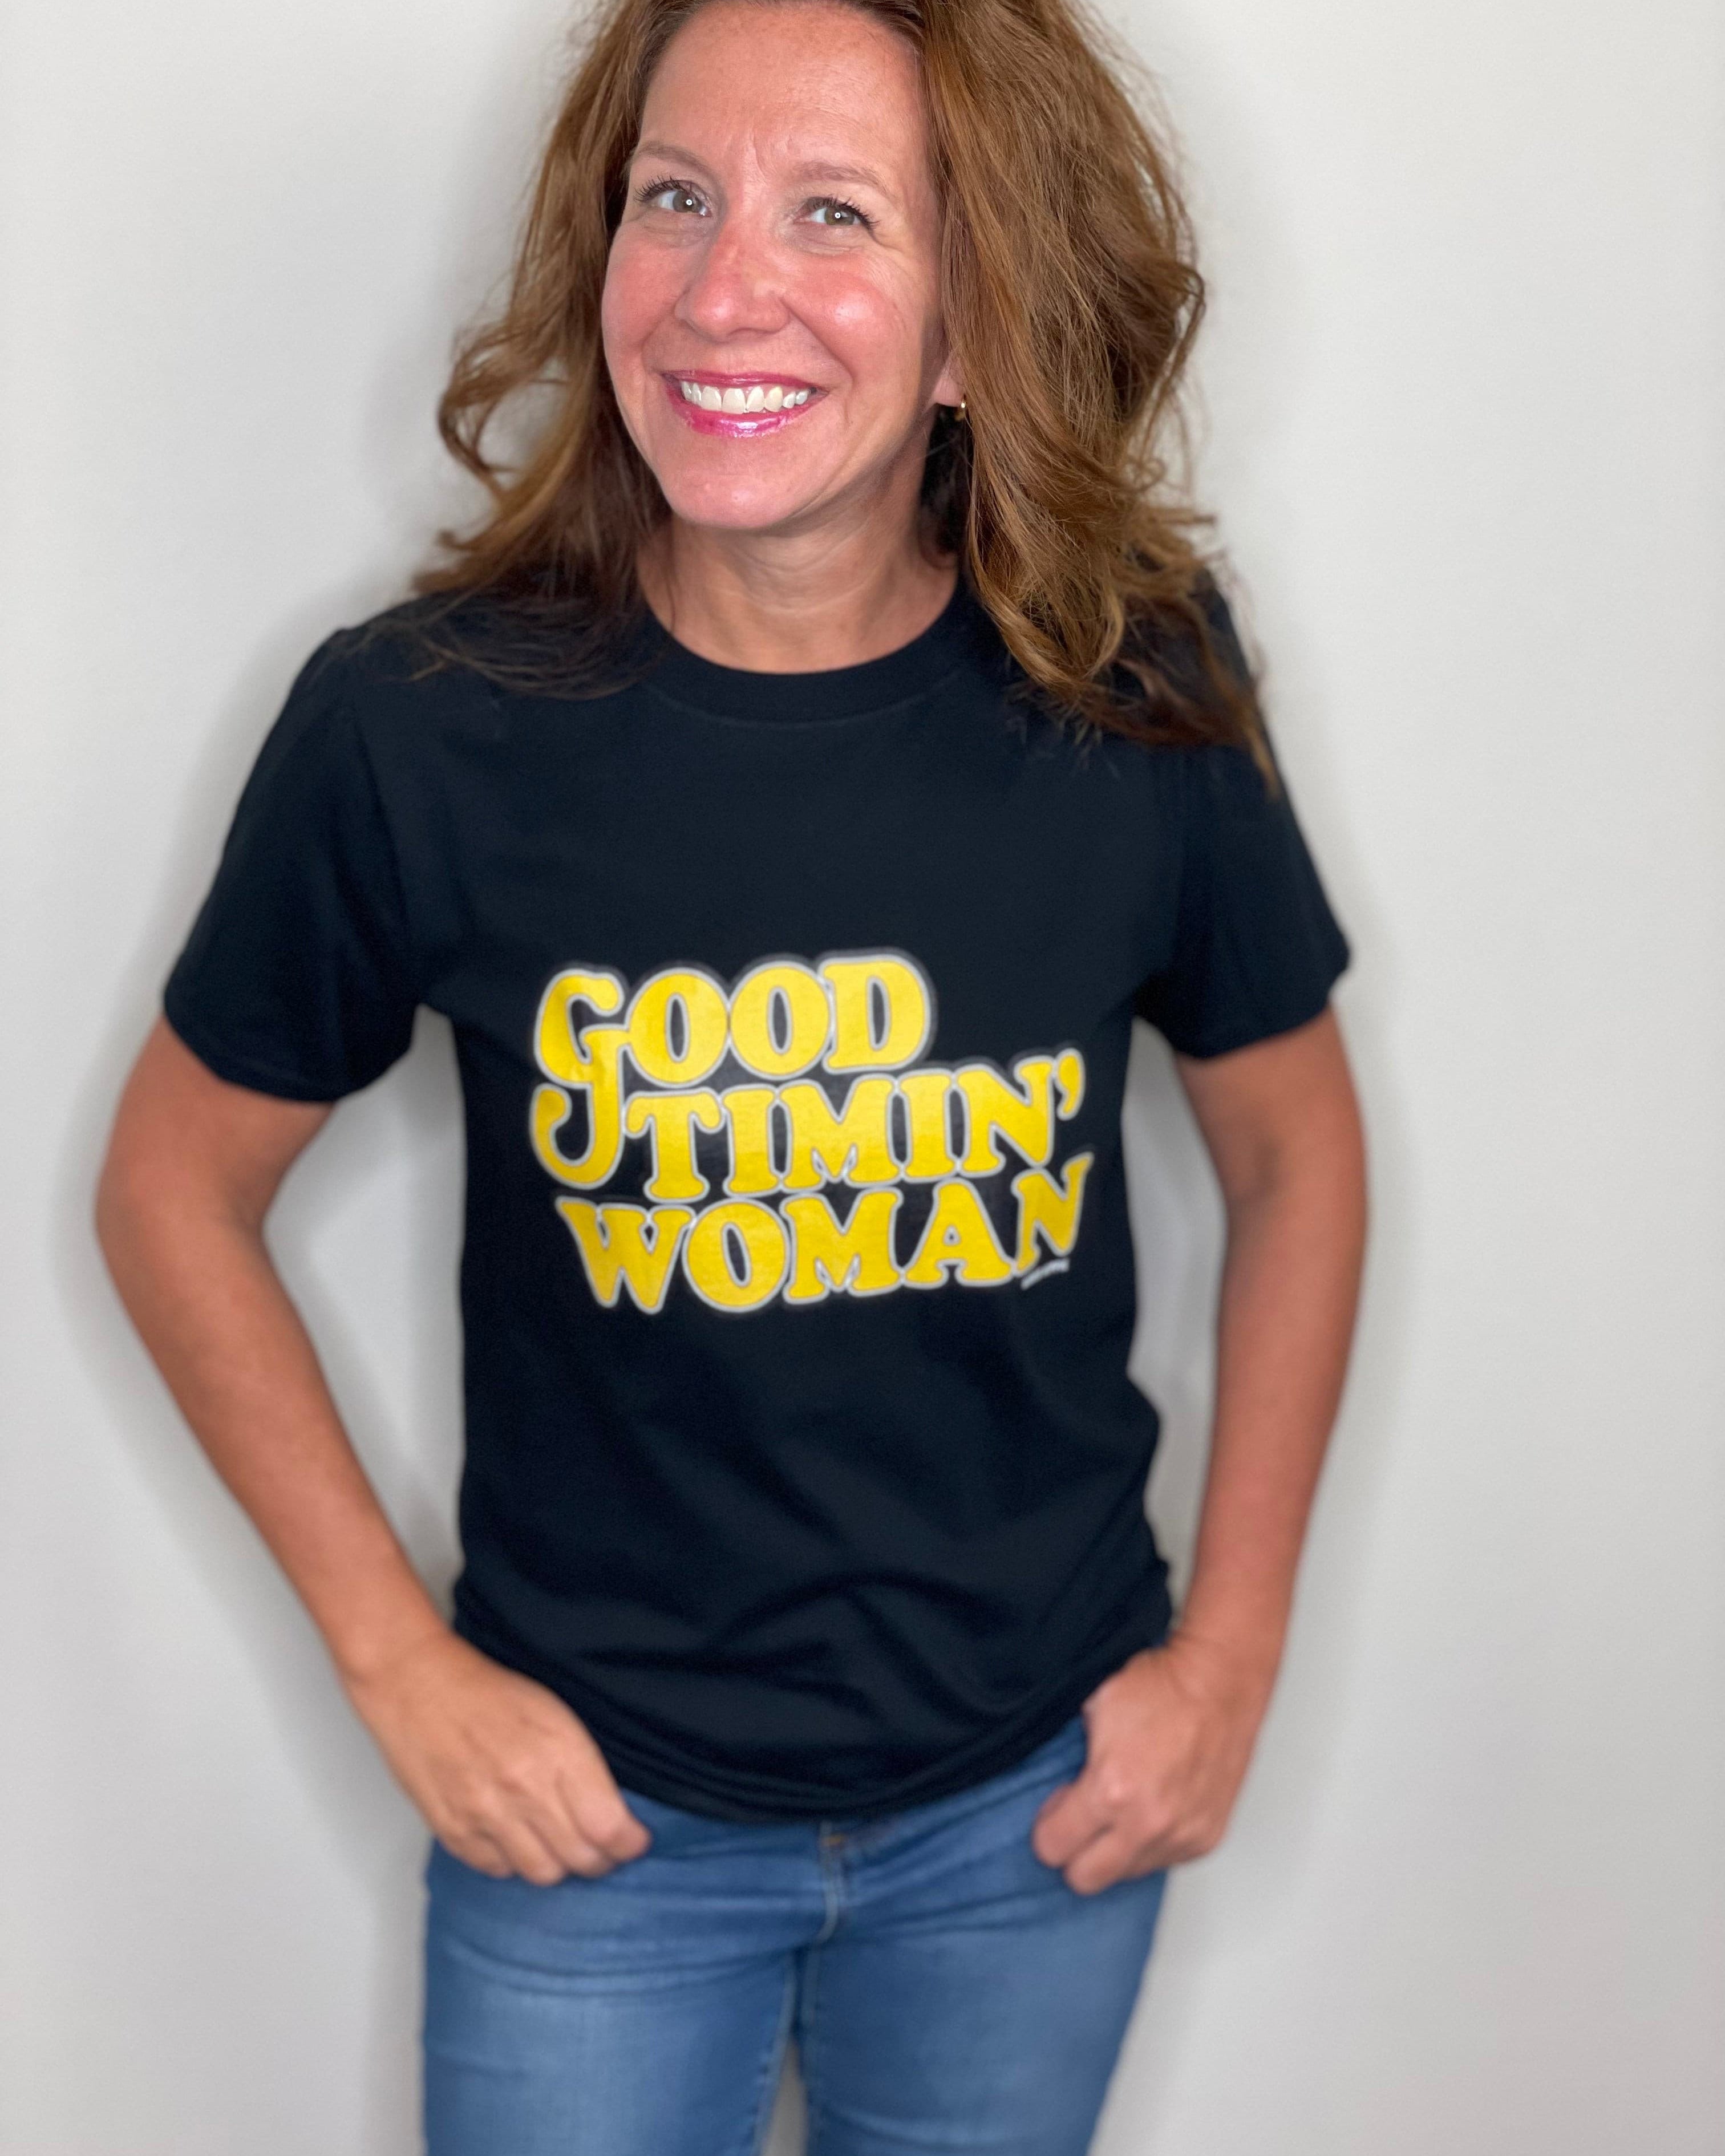 Good Timin’ Woman.